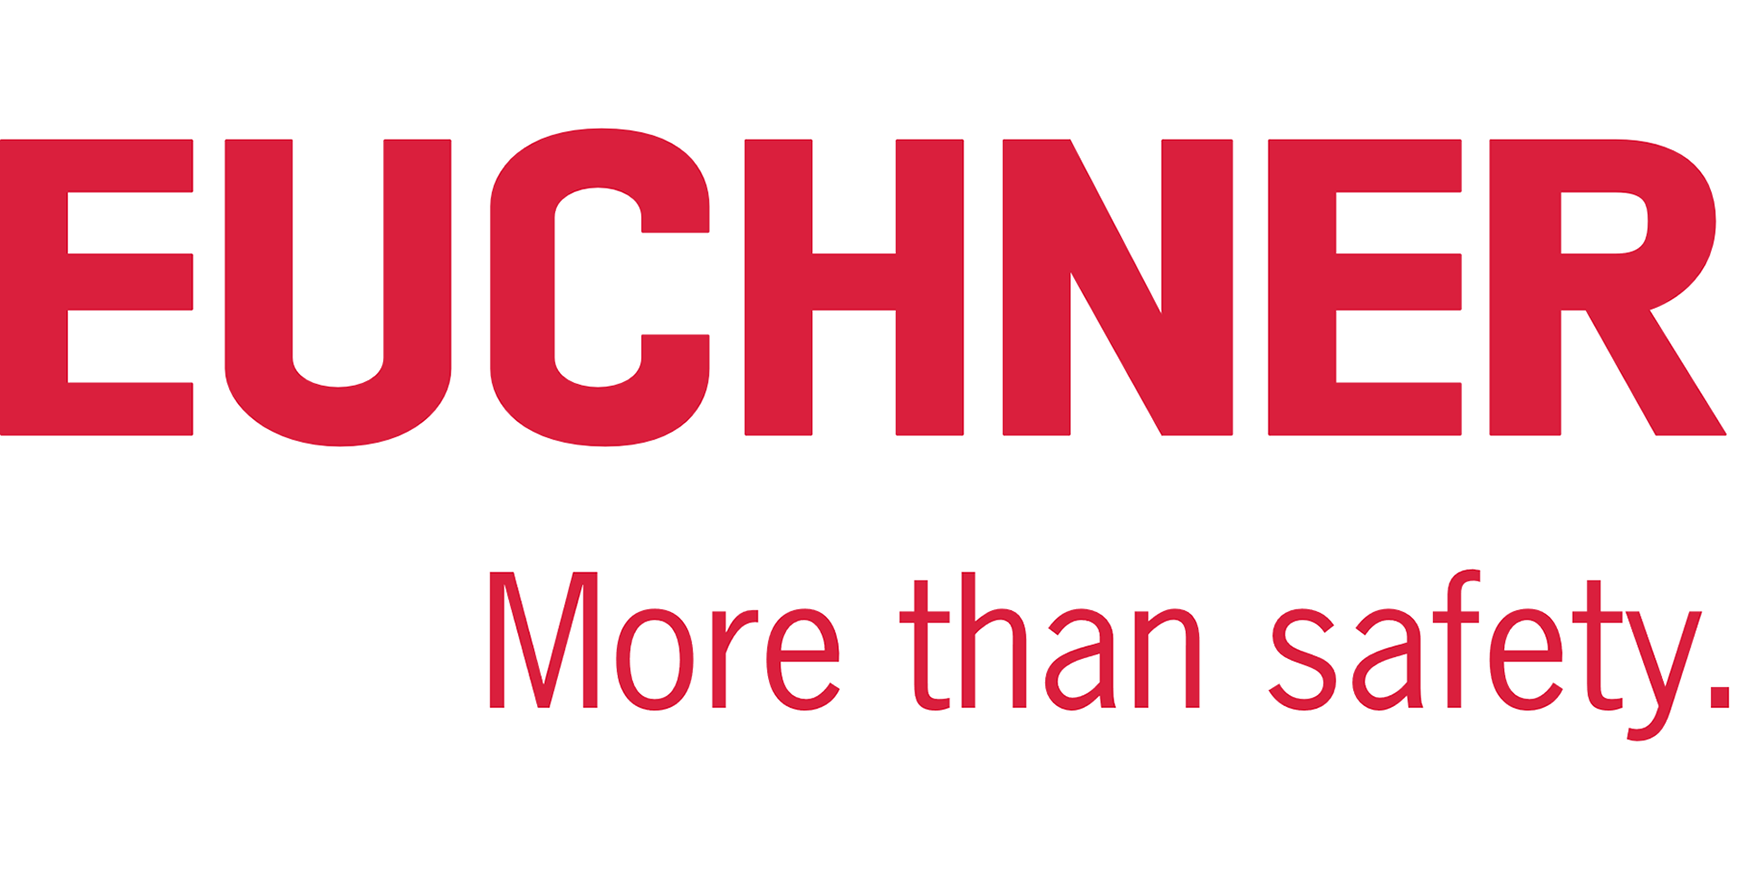 Euchner - Machinery Safety Solutions